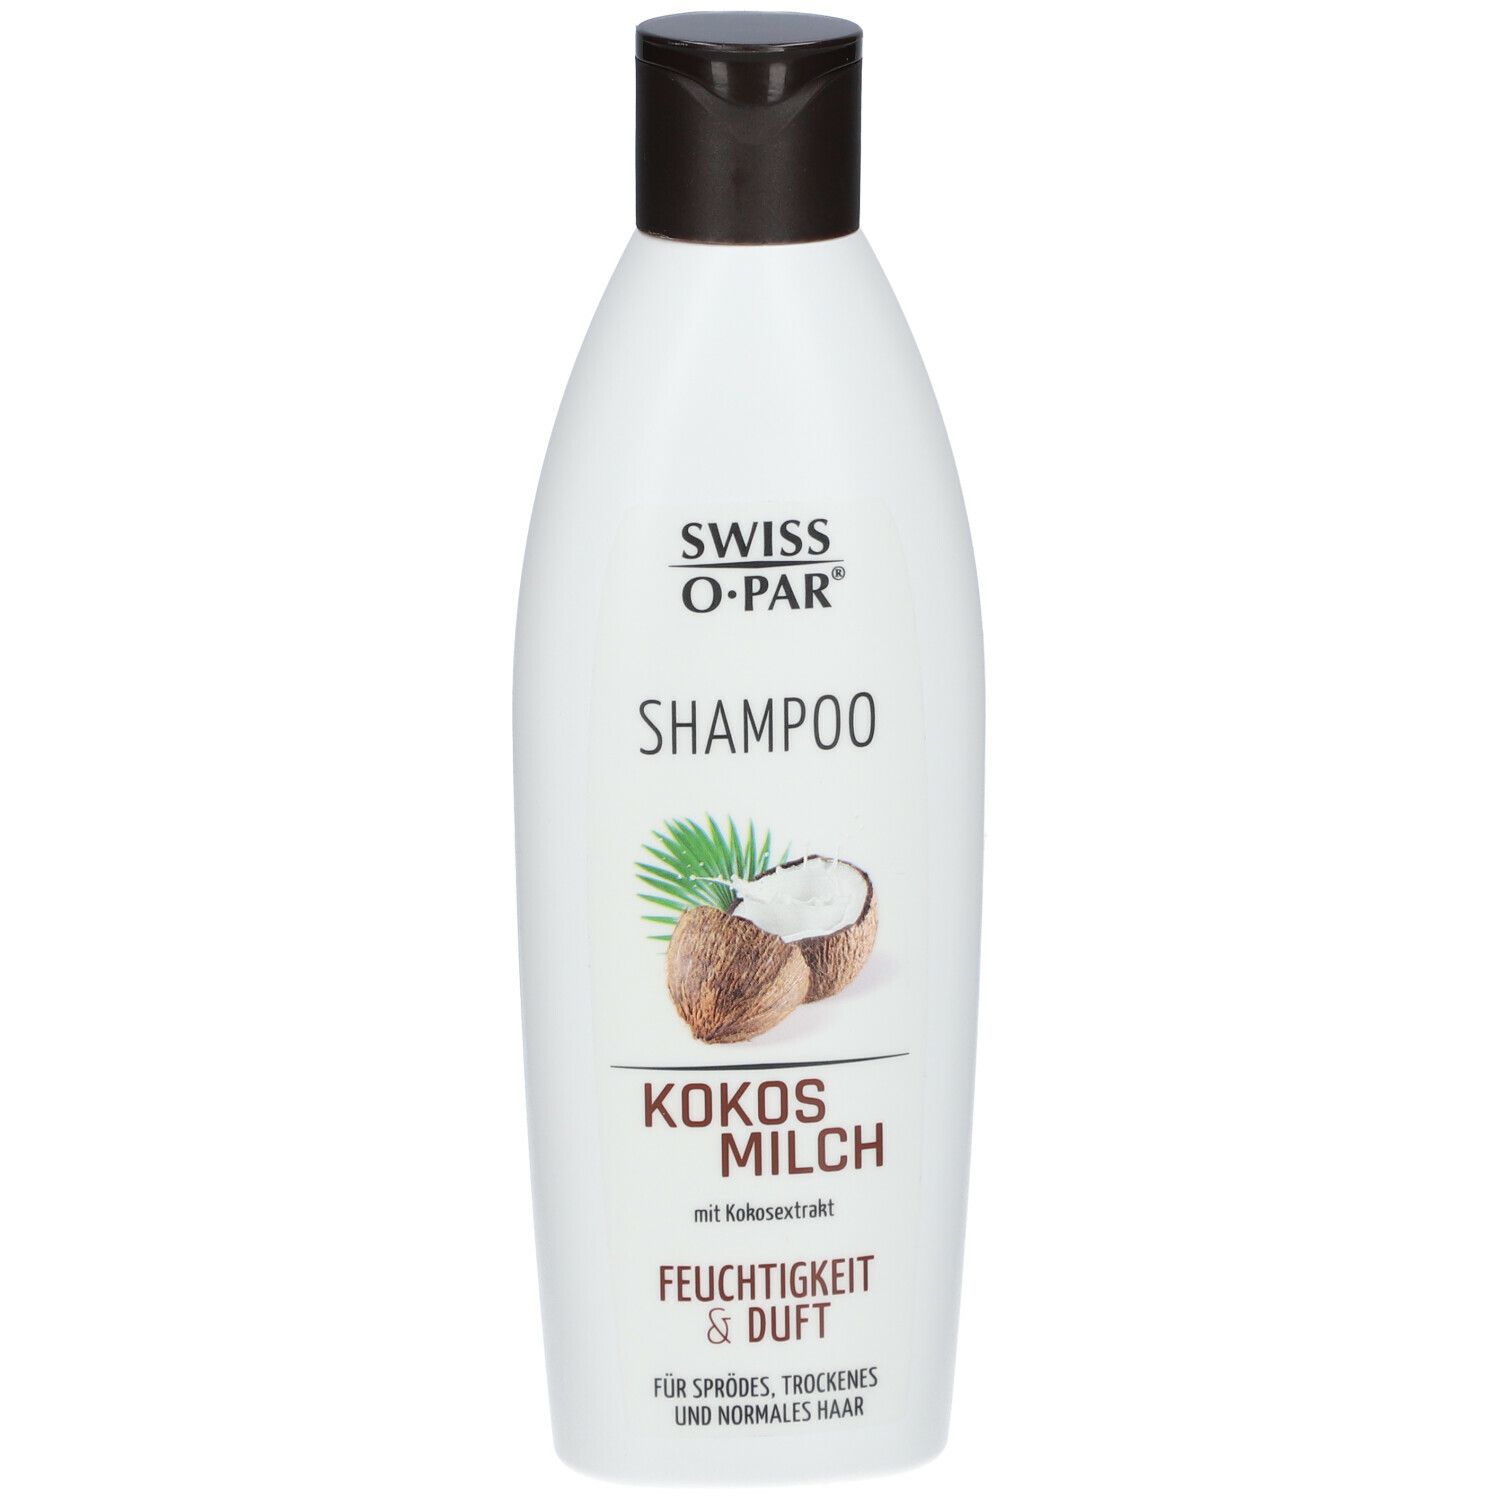 SWISS-O-PAR® Kokos-Milch Shampoo